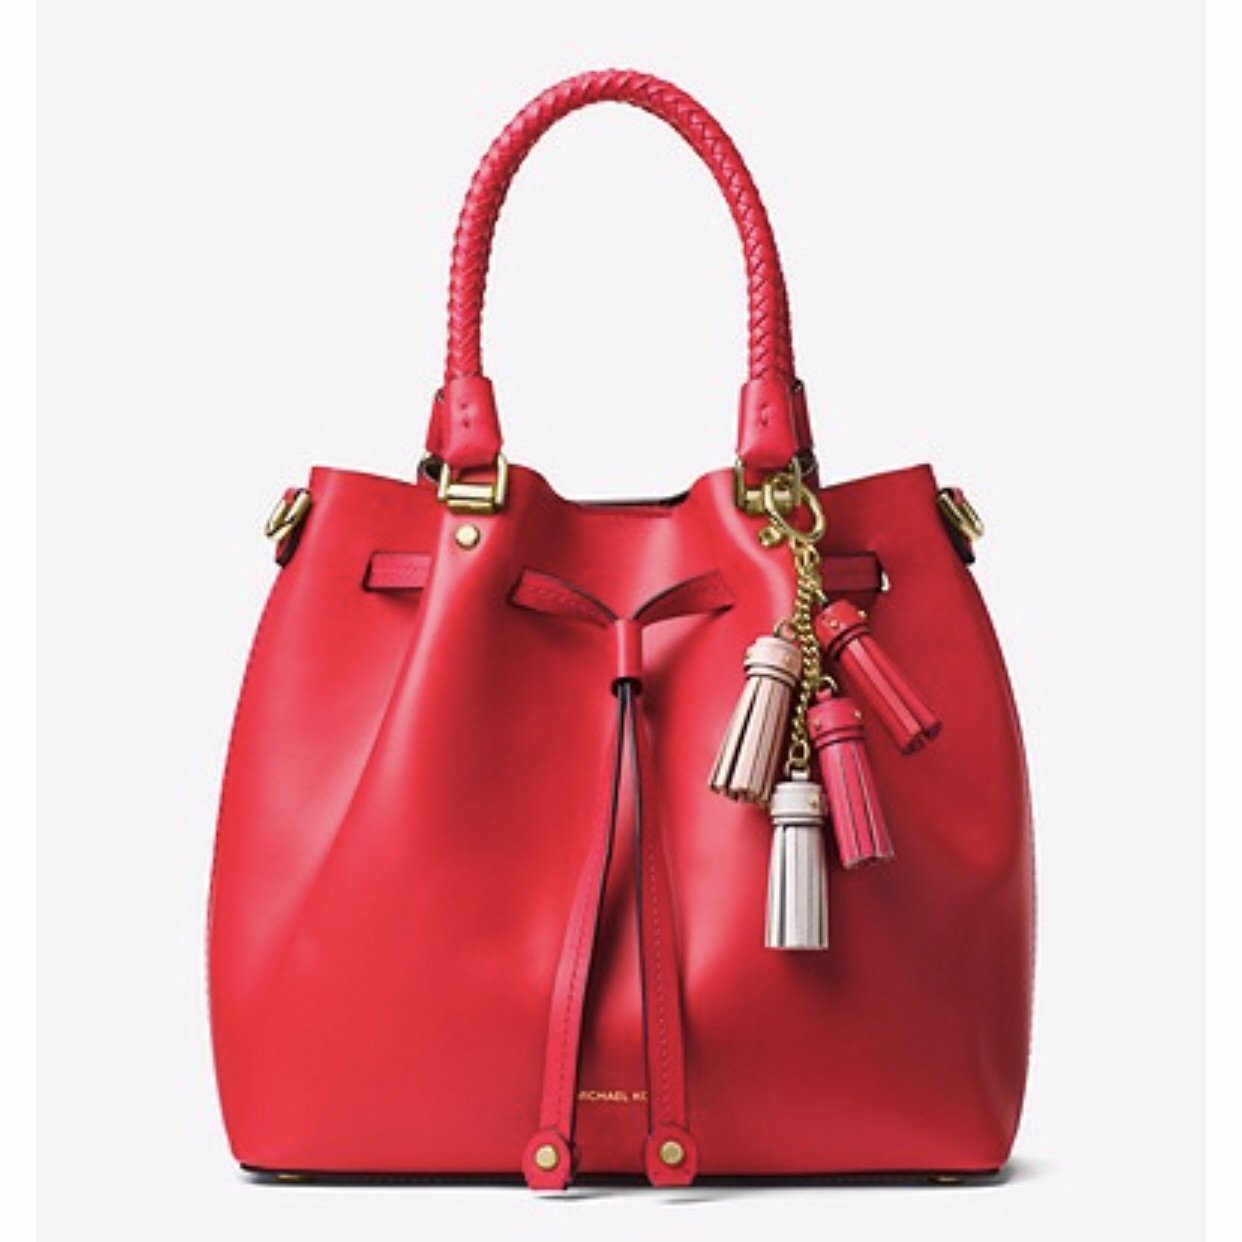 Michael Kors Woman's Leather Mini Bag